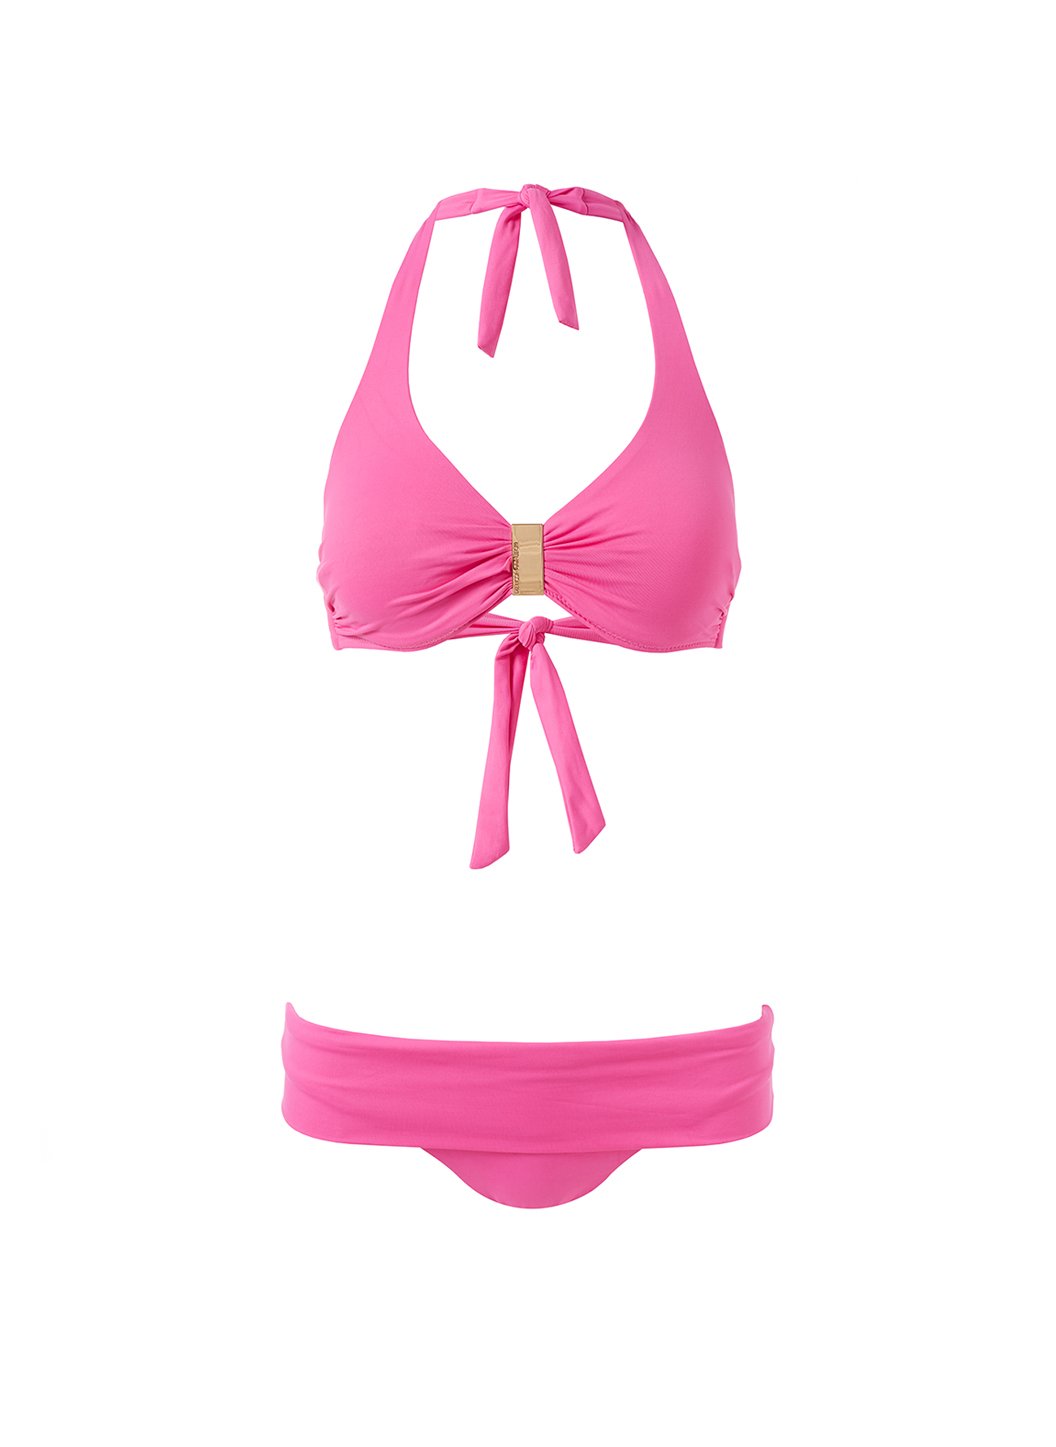 Avanova Women's Medium Hot Pink Belted Swimsuit